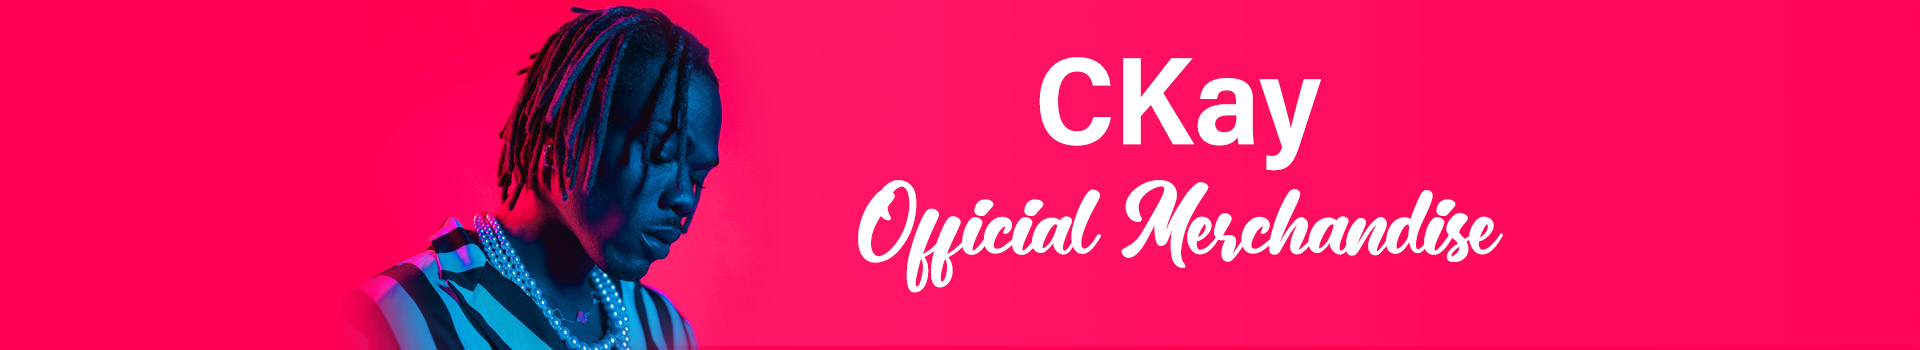 CKay - Official Merchandise